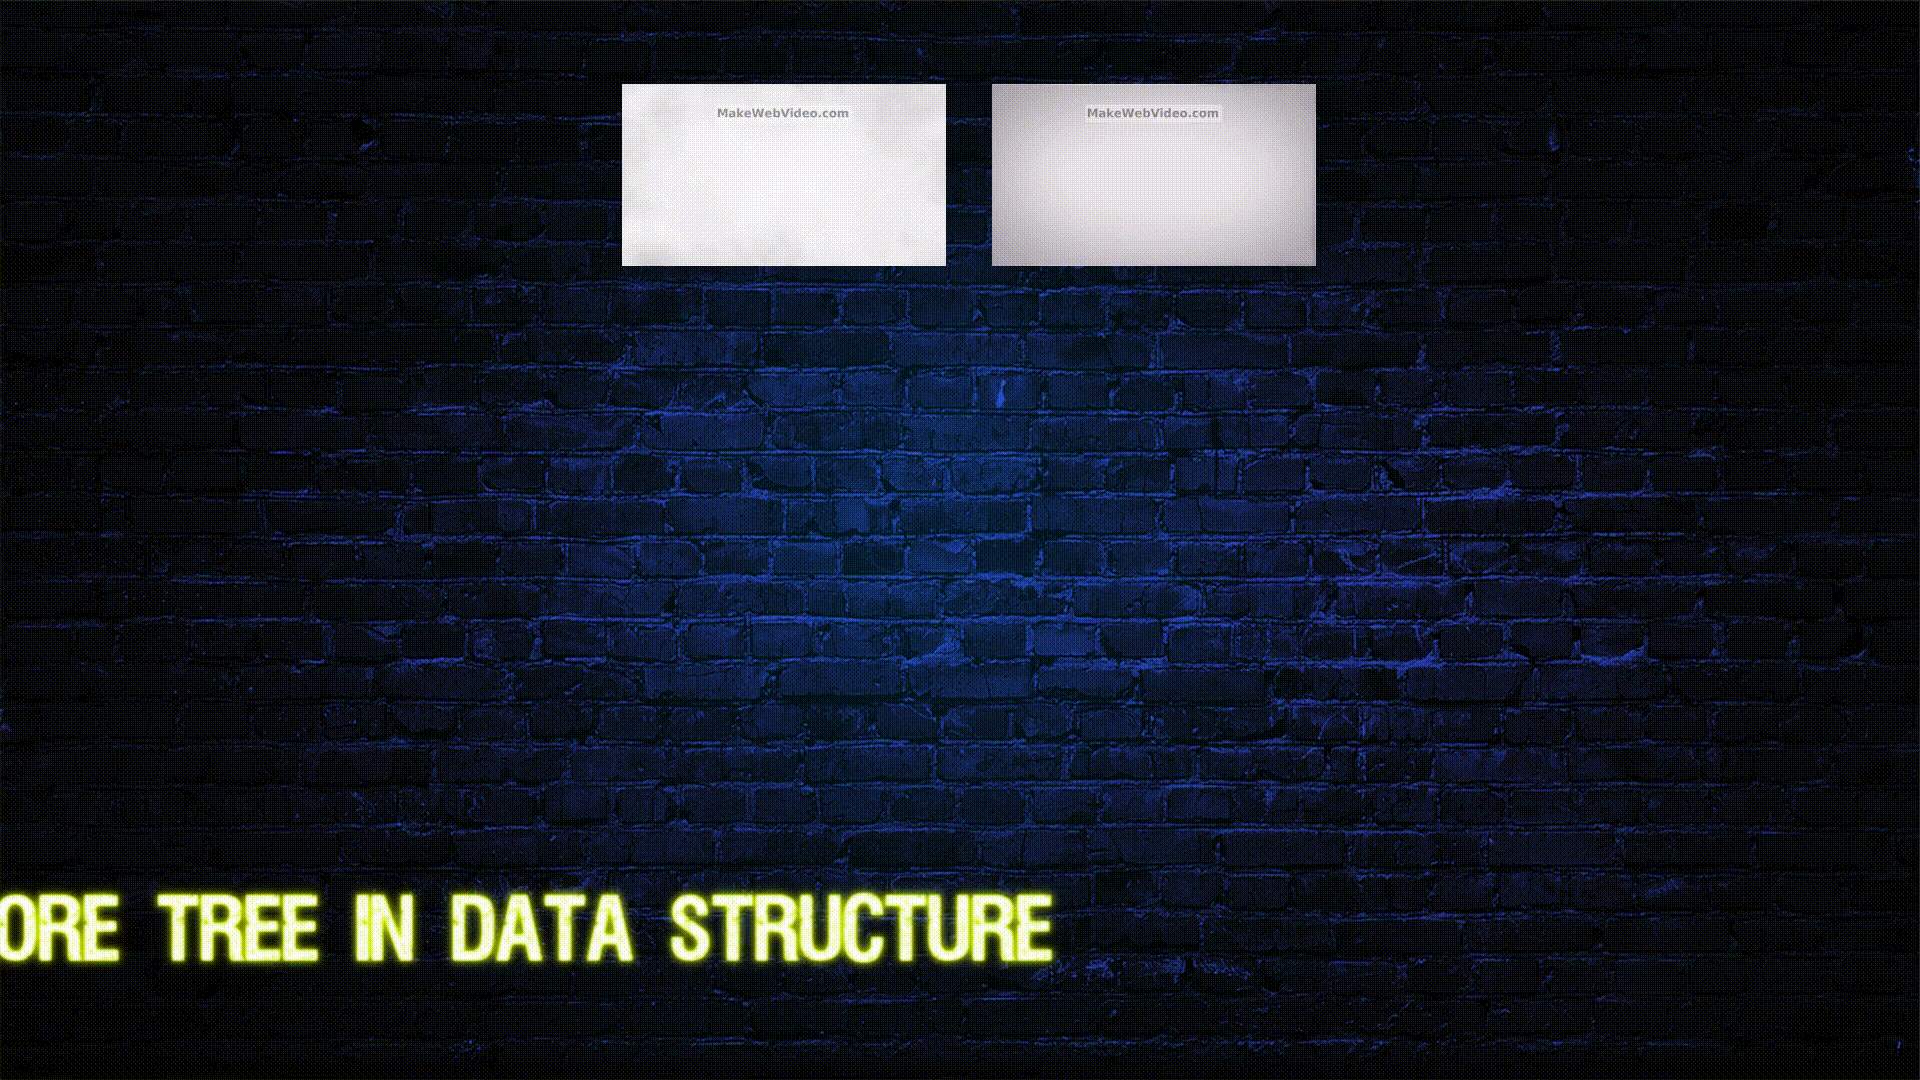 Explore Tree In Data Structure